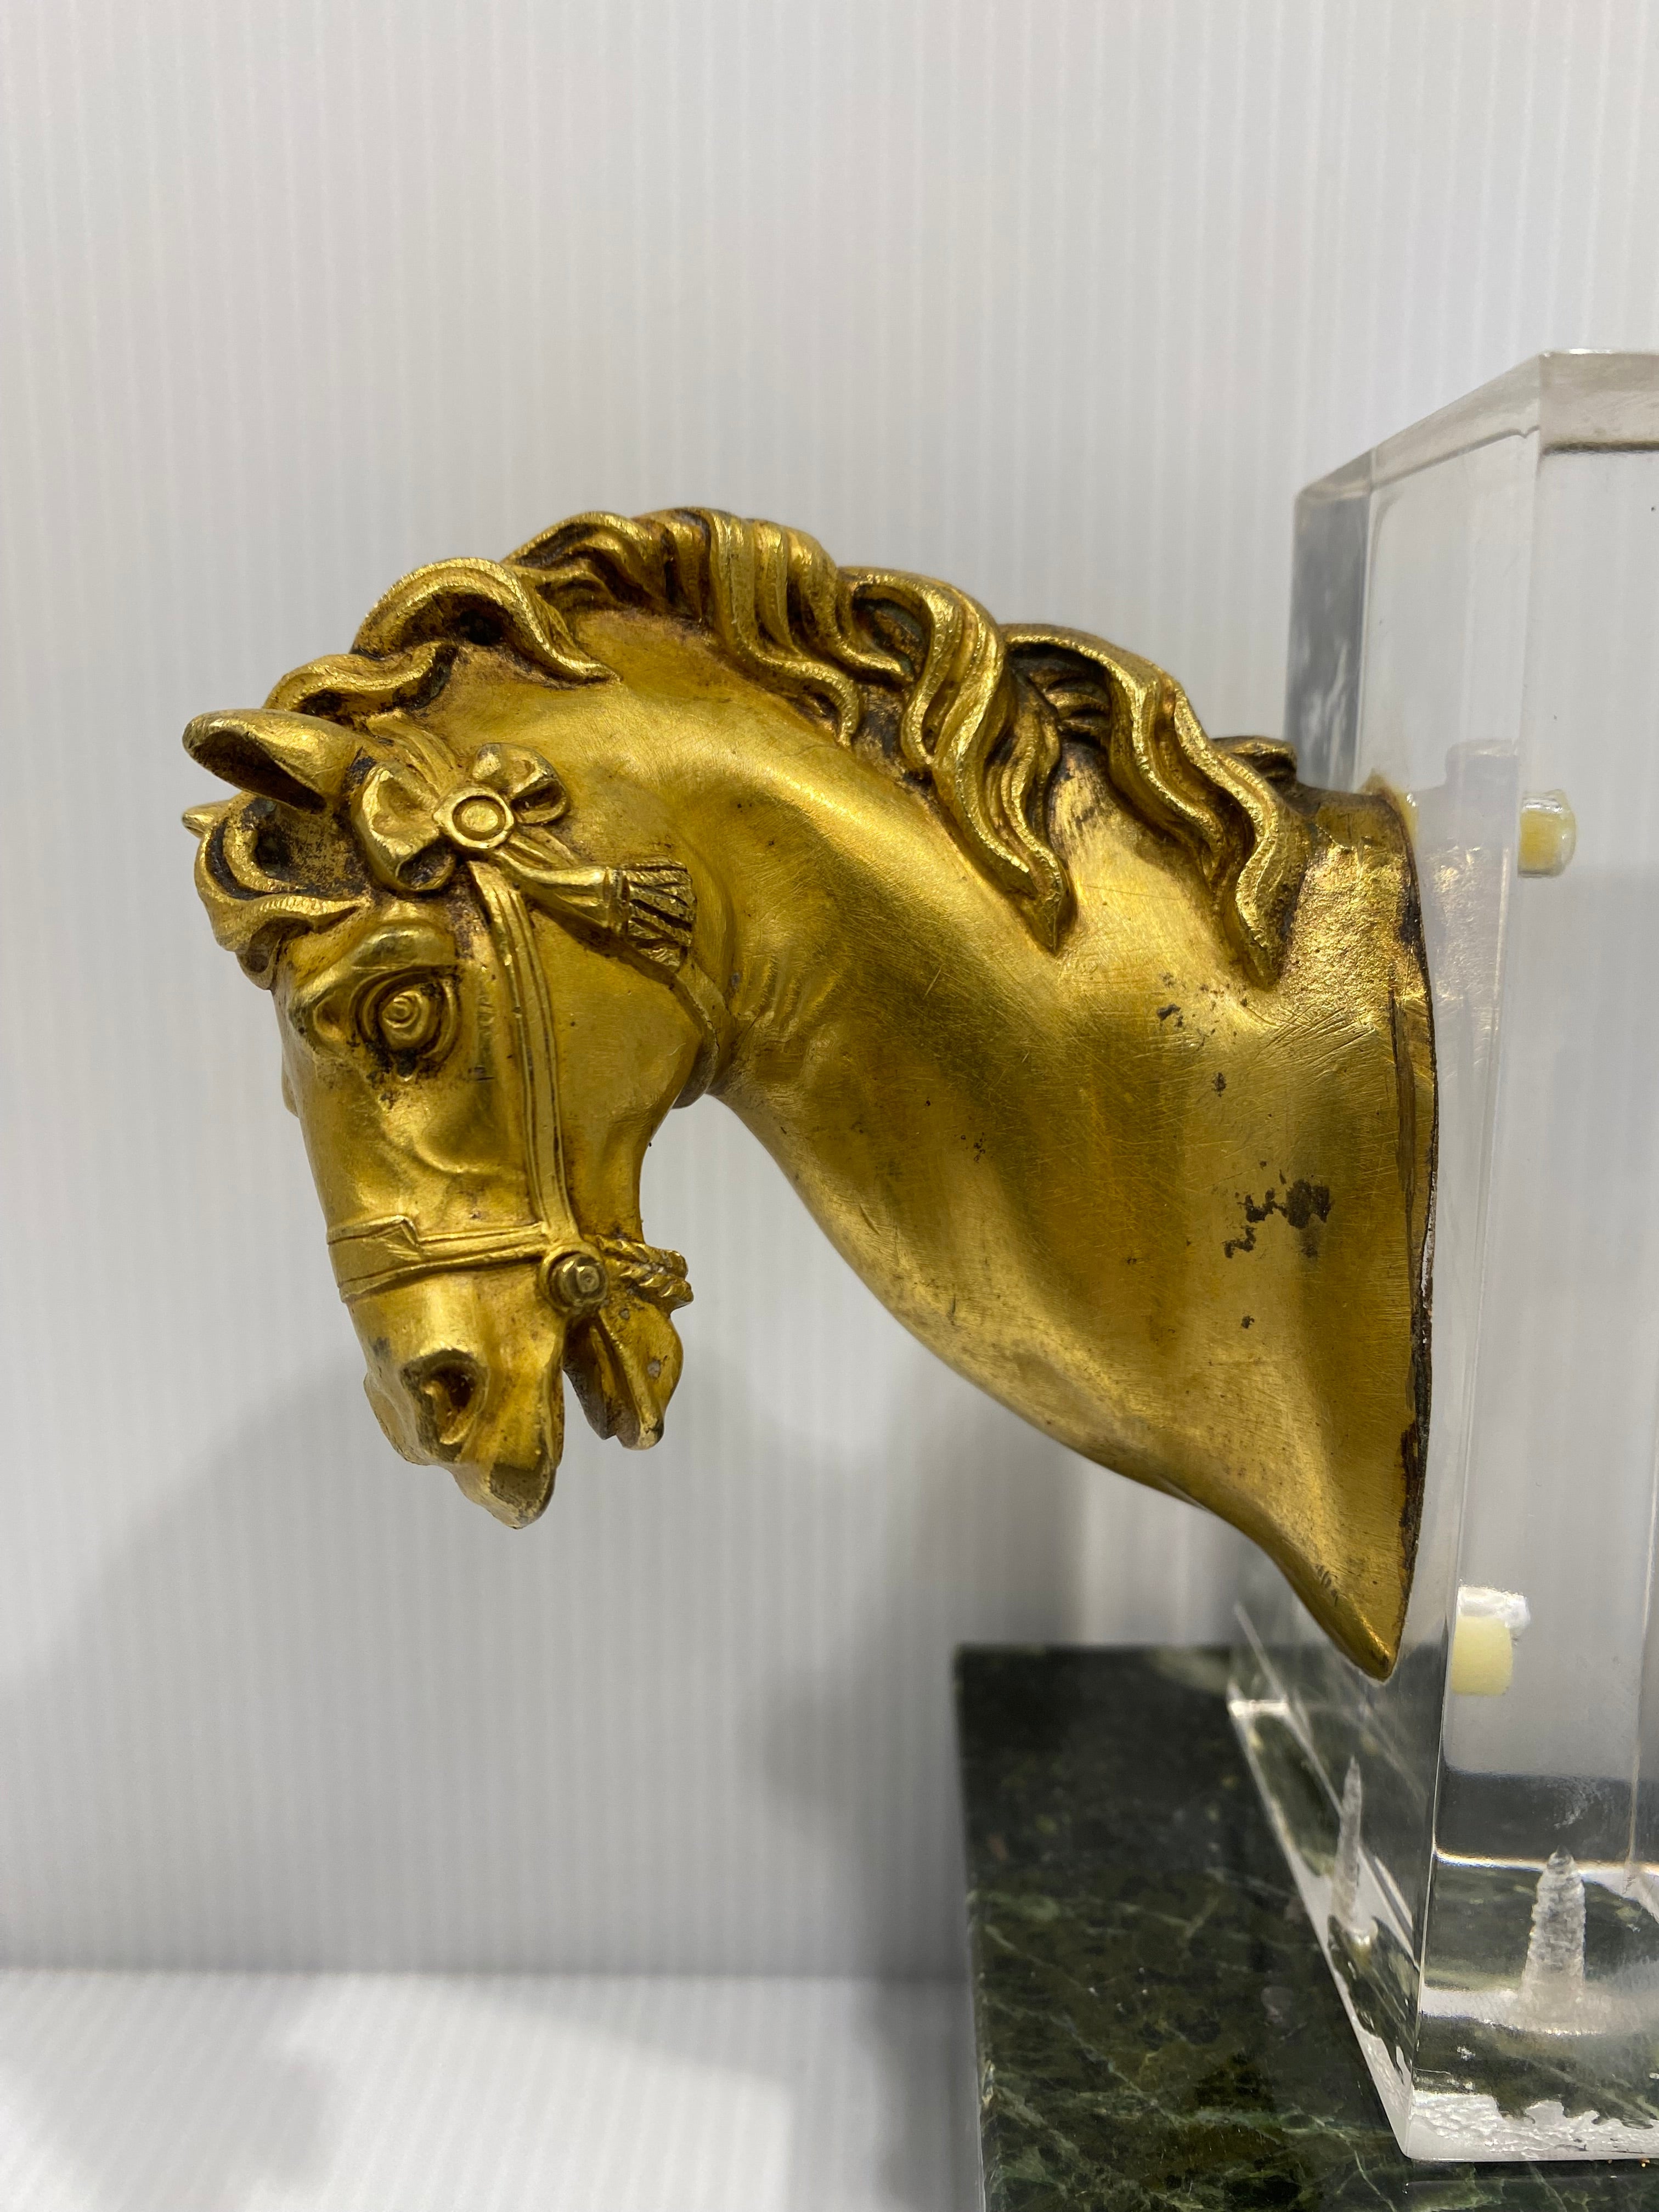 Antique gilt bronze Horse Head Sculpture, Decorative Part of an Italian Country House.